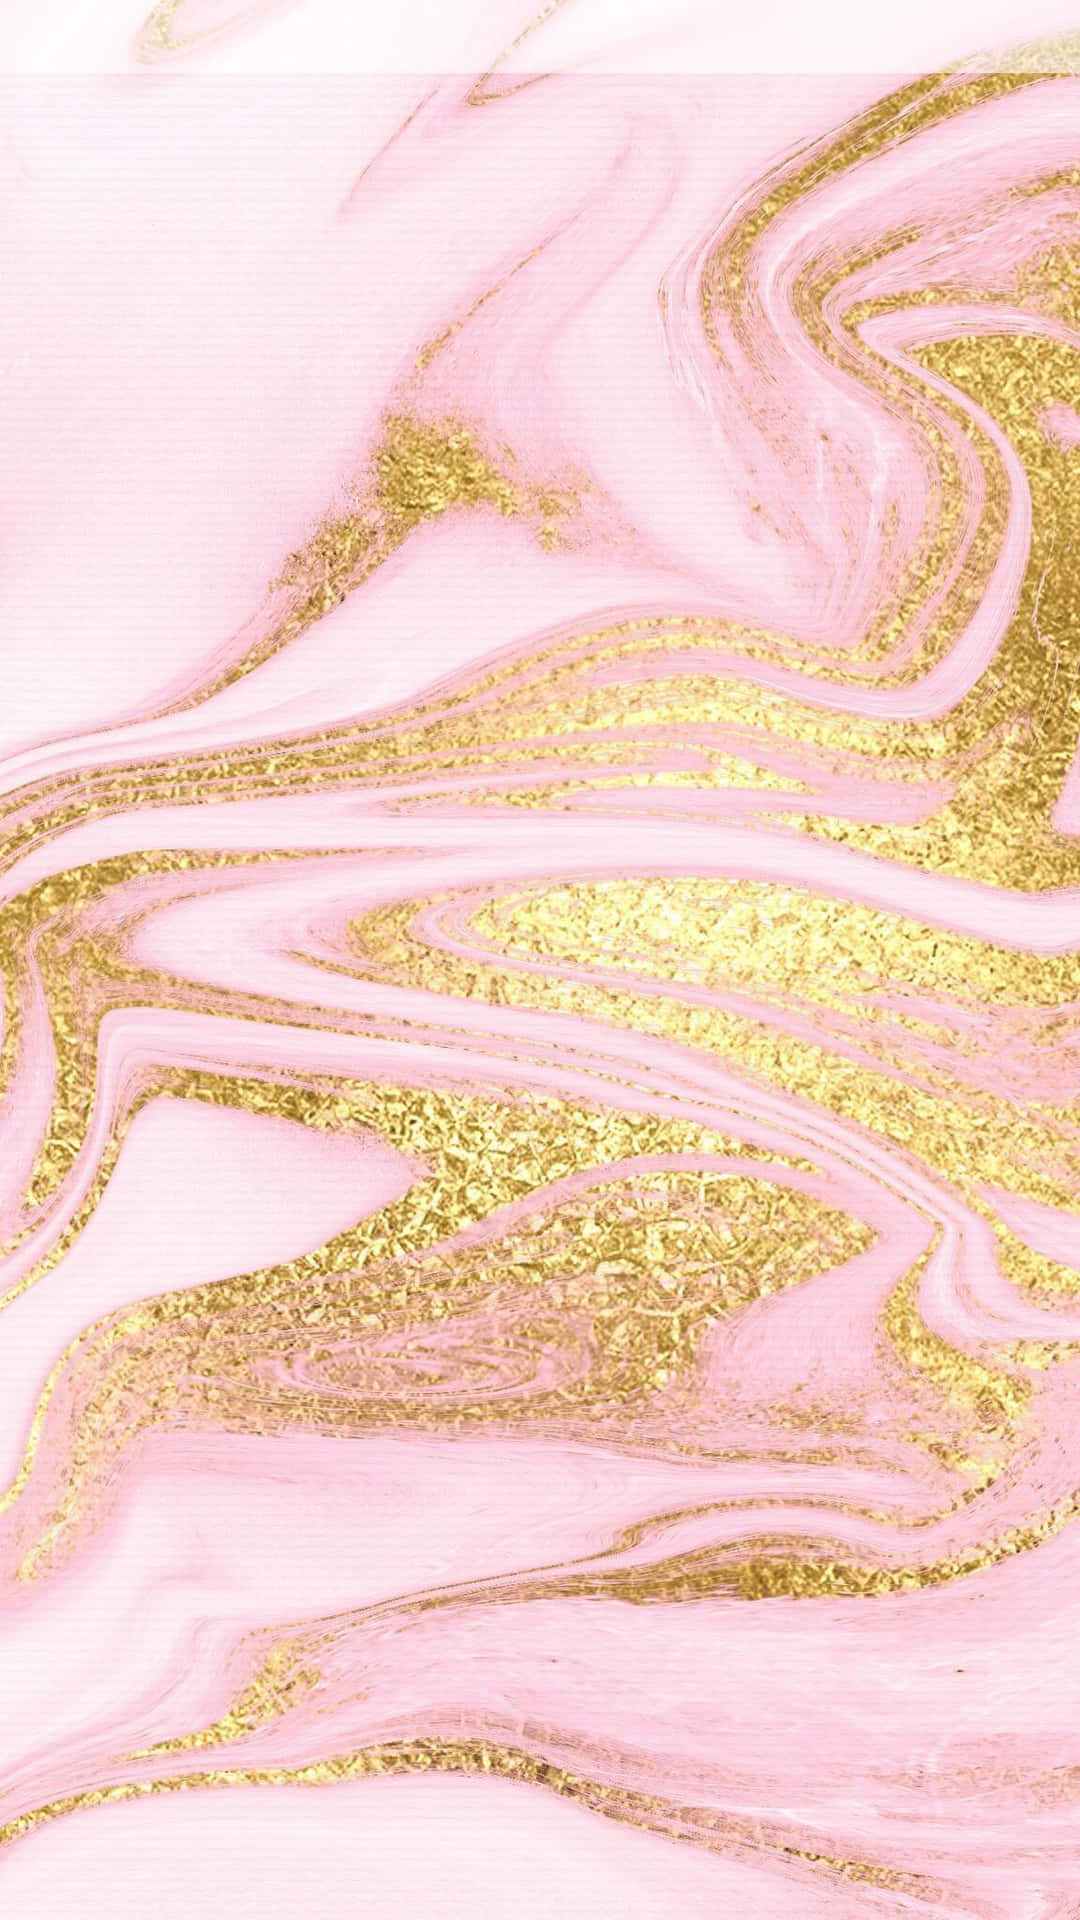 Rose Gold iPhone 5 Liquid Swirl Wallpaper